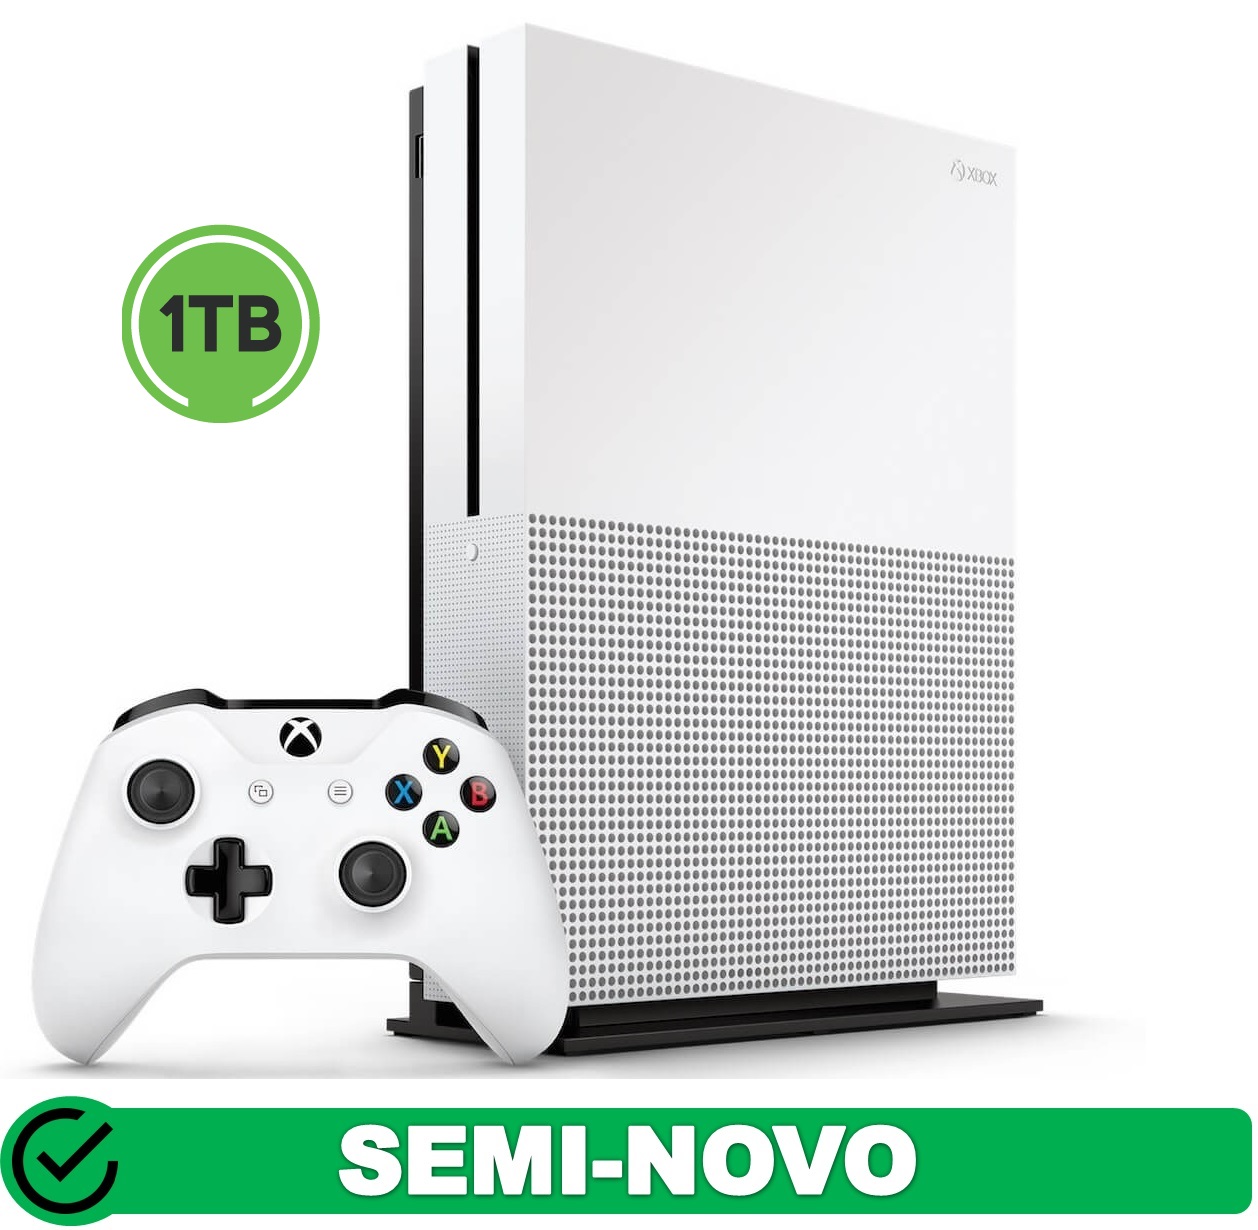 Microsoft Xbox One S 1TB Seminovo Usado Completo na Caixa + Garantia